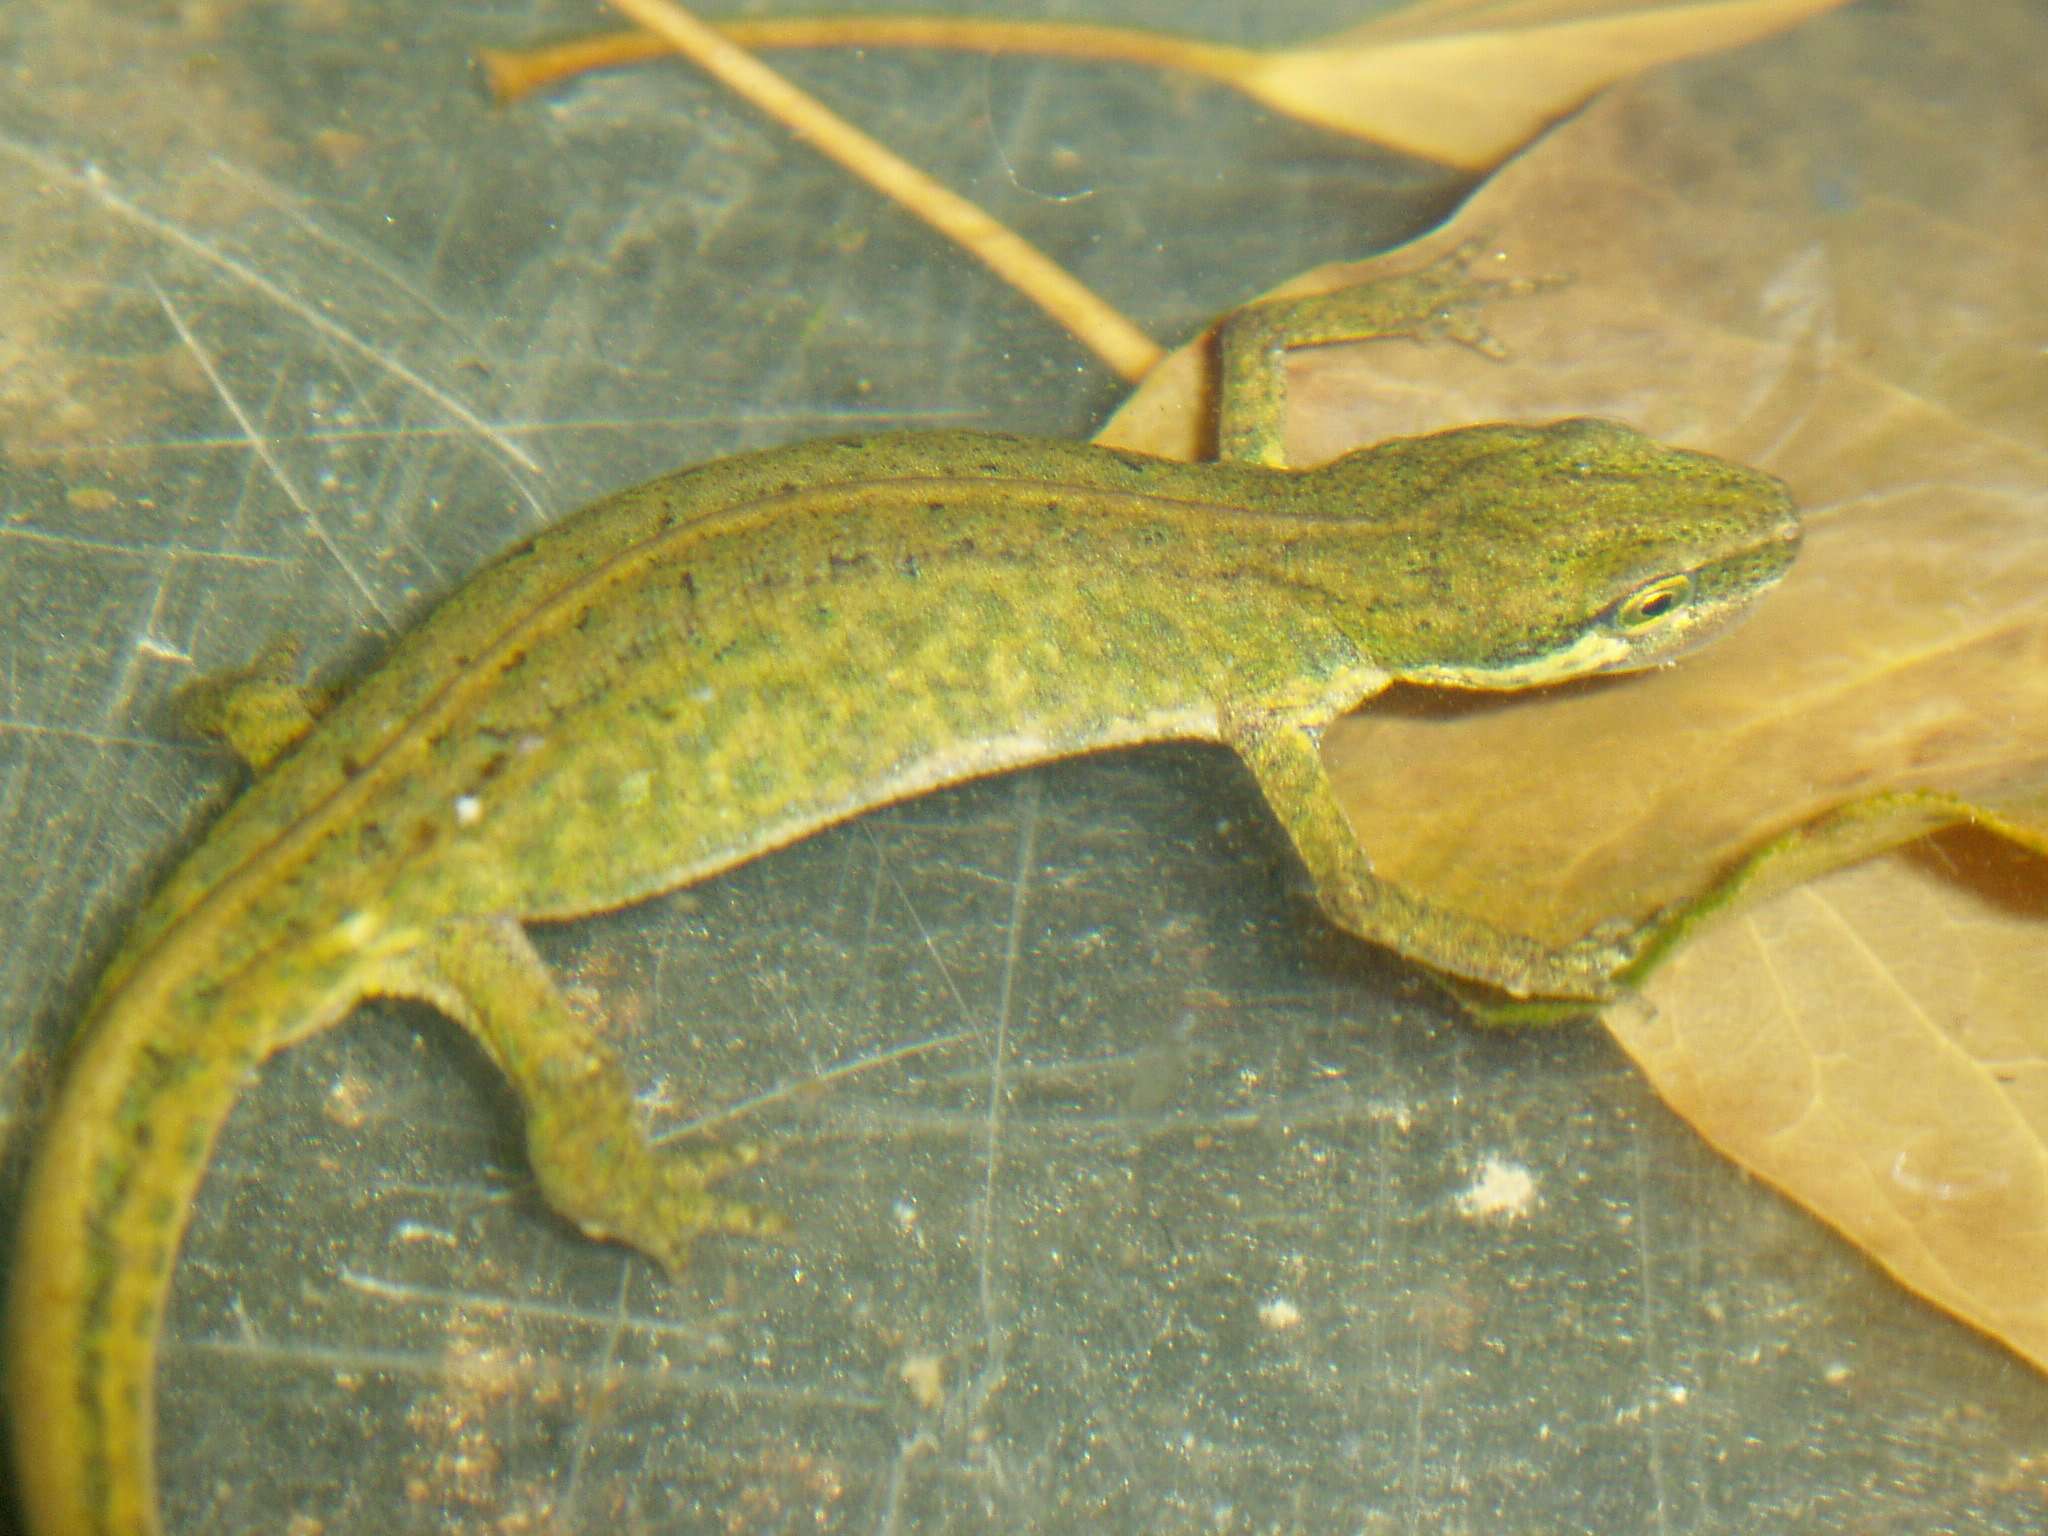 Image of Palmate newt